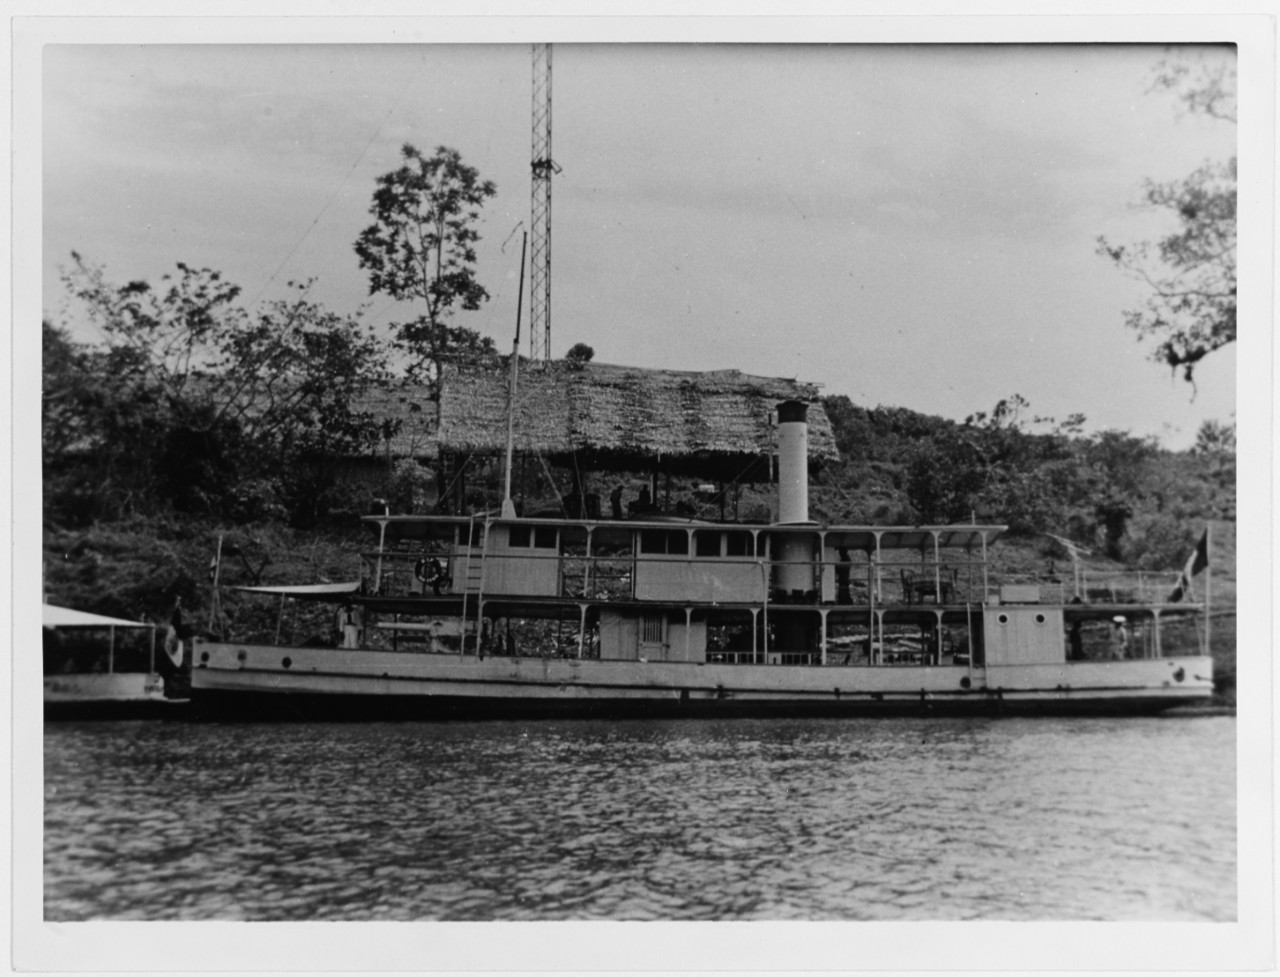 IQUITOS (Peruvian River Gunboat, 1875-1967)